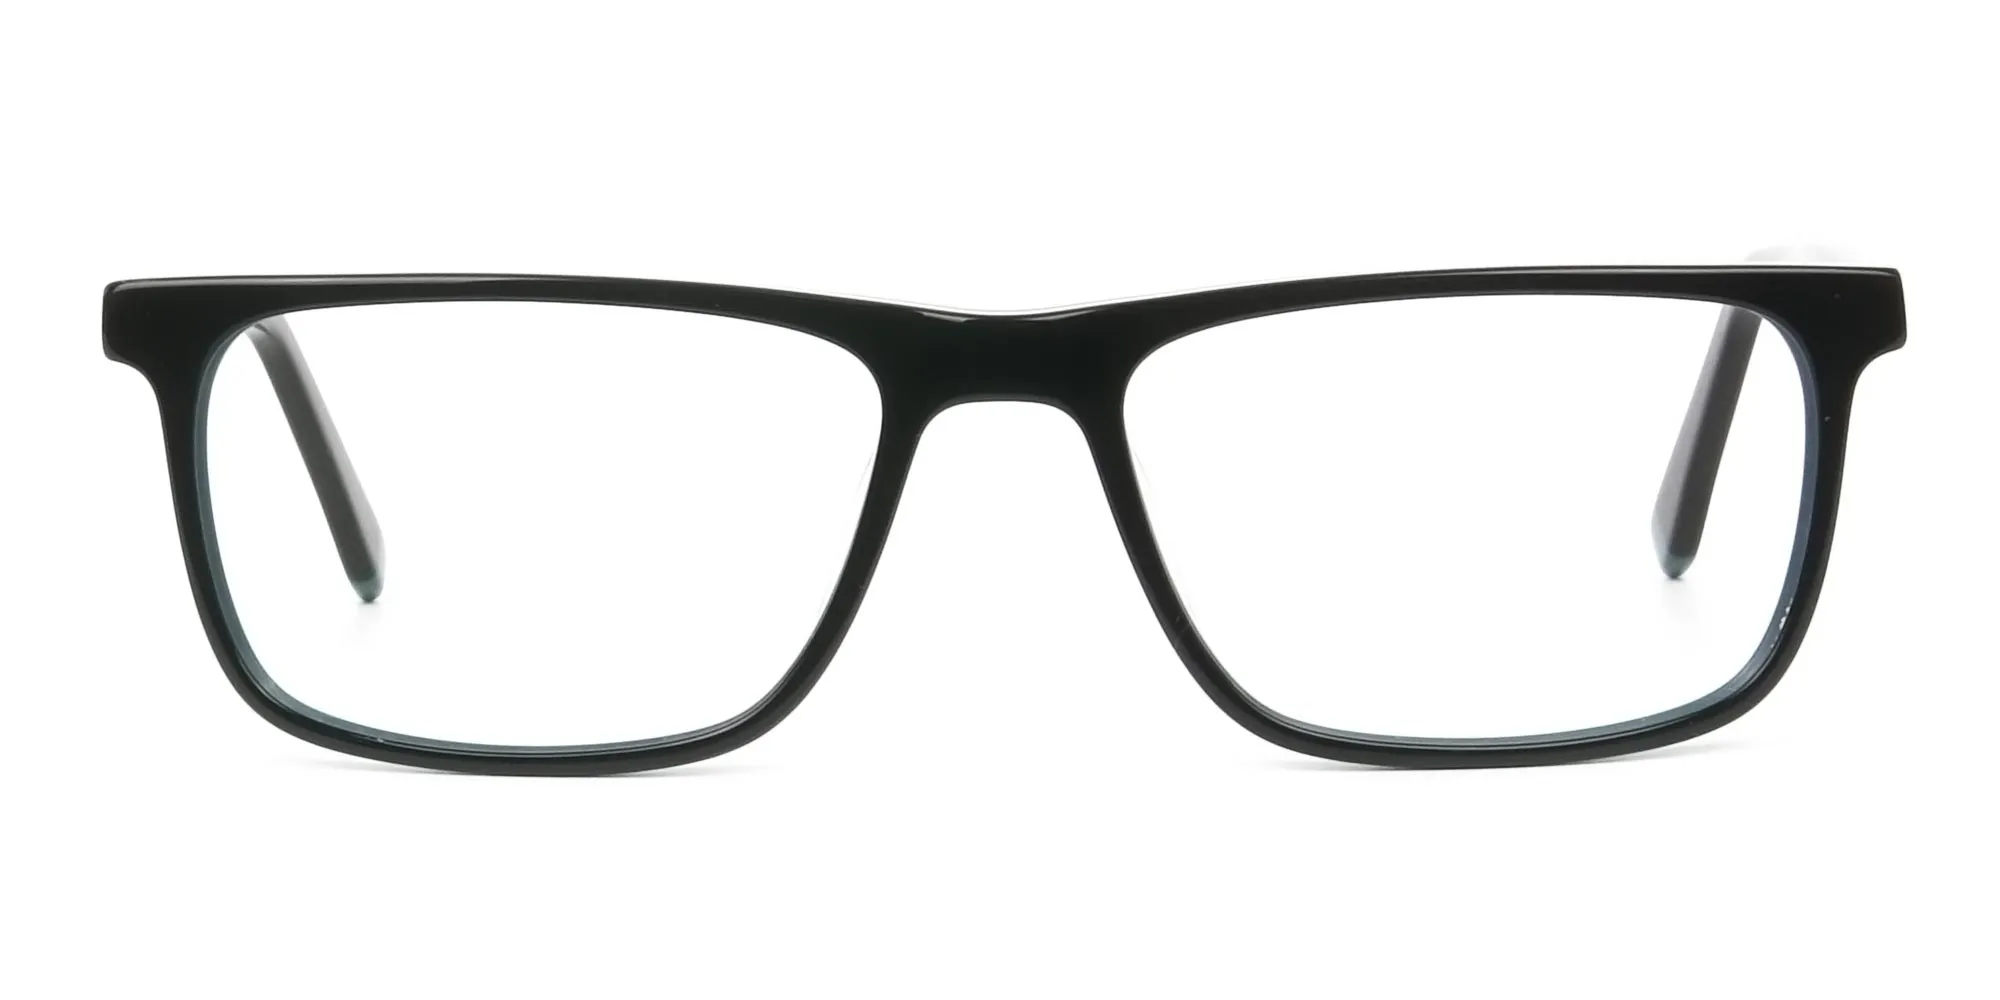 Black and Dark Green Temple Tips Glasses in Rectangular - 2